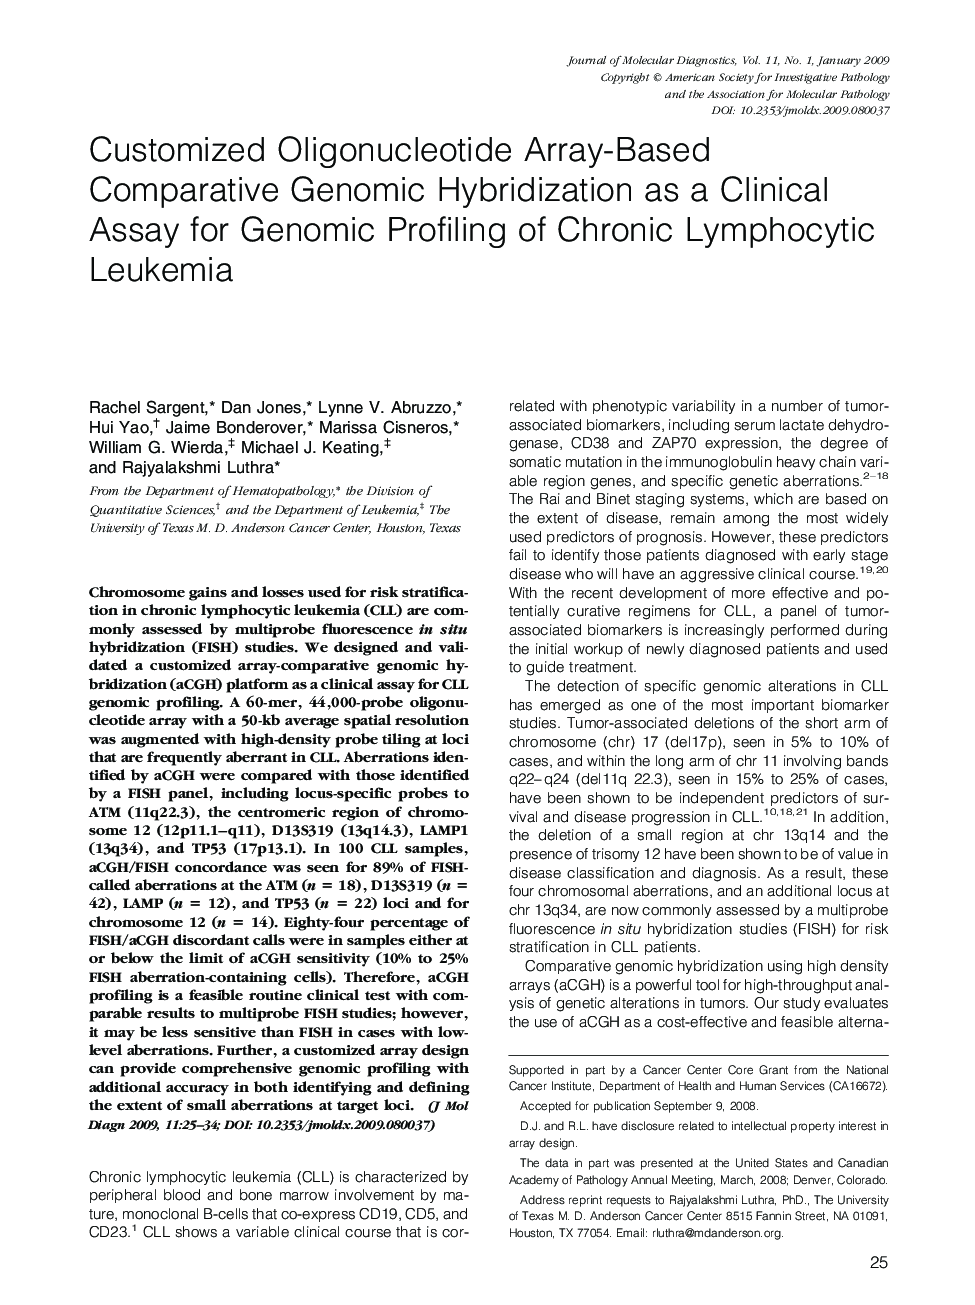 Customized Oligonucleotide Array-Based Comparative Genomic Hybridization as a Clinical Assay for Genomic Profiling of Chronic Lymphocytic Leukemia 